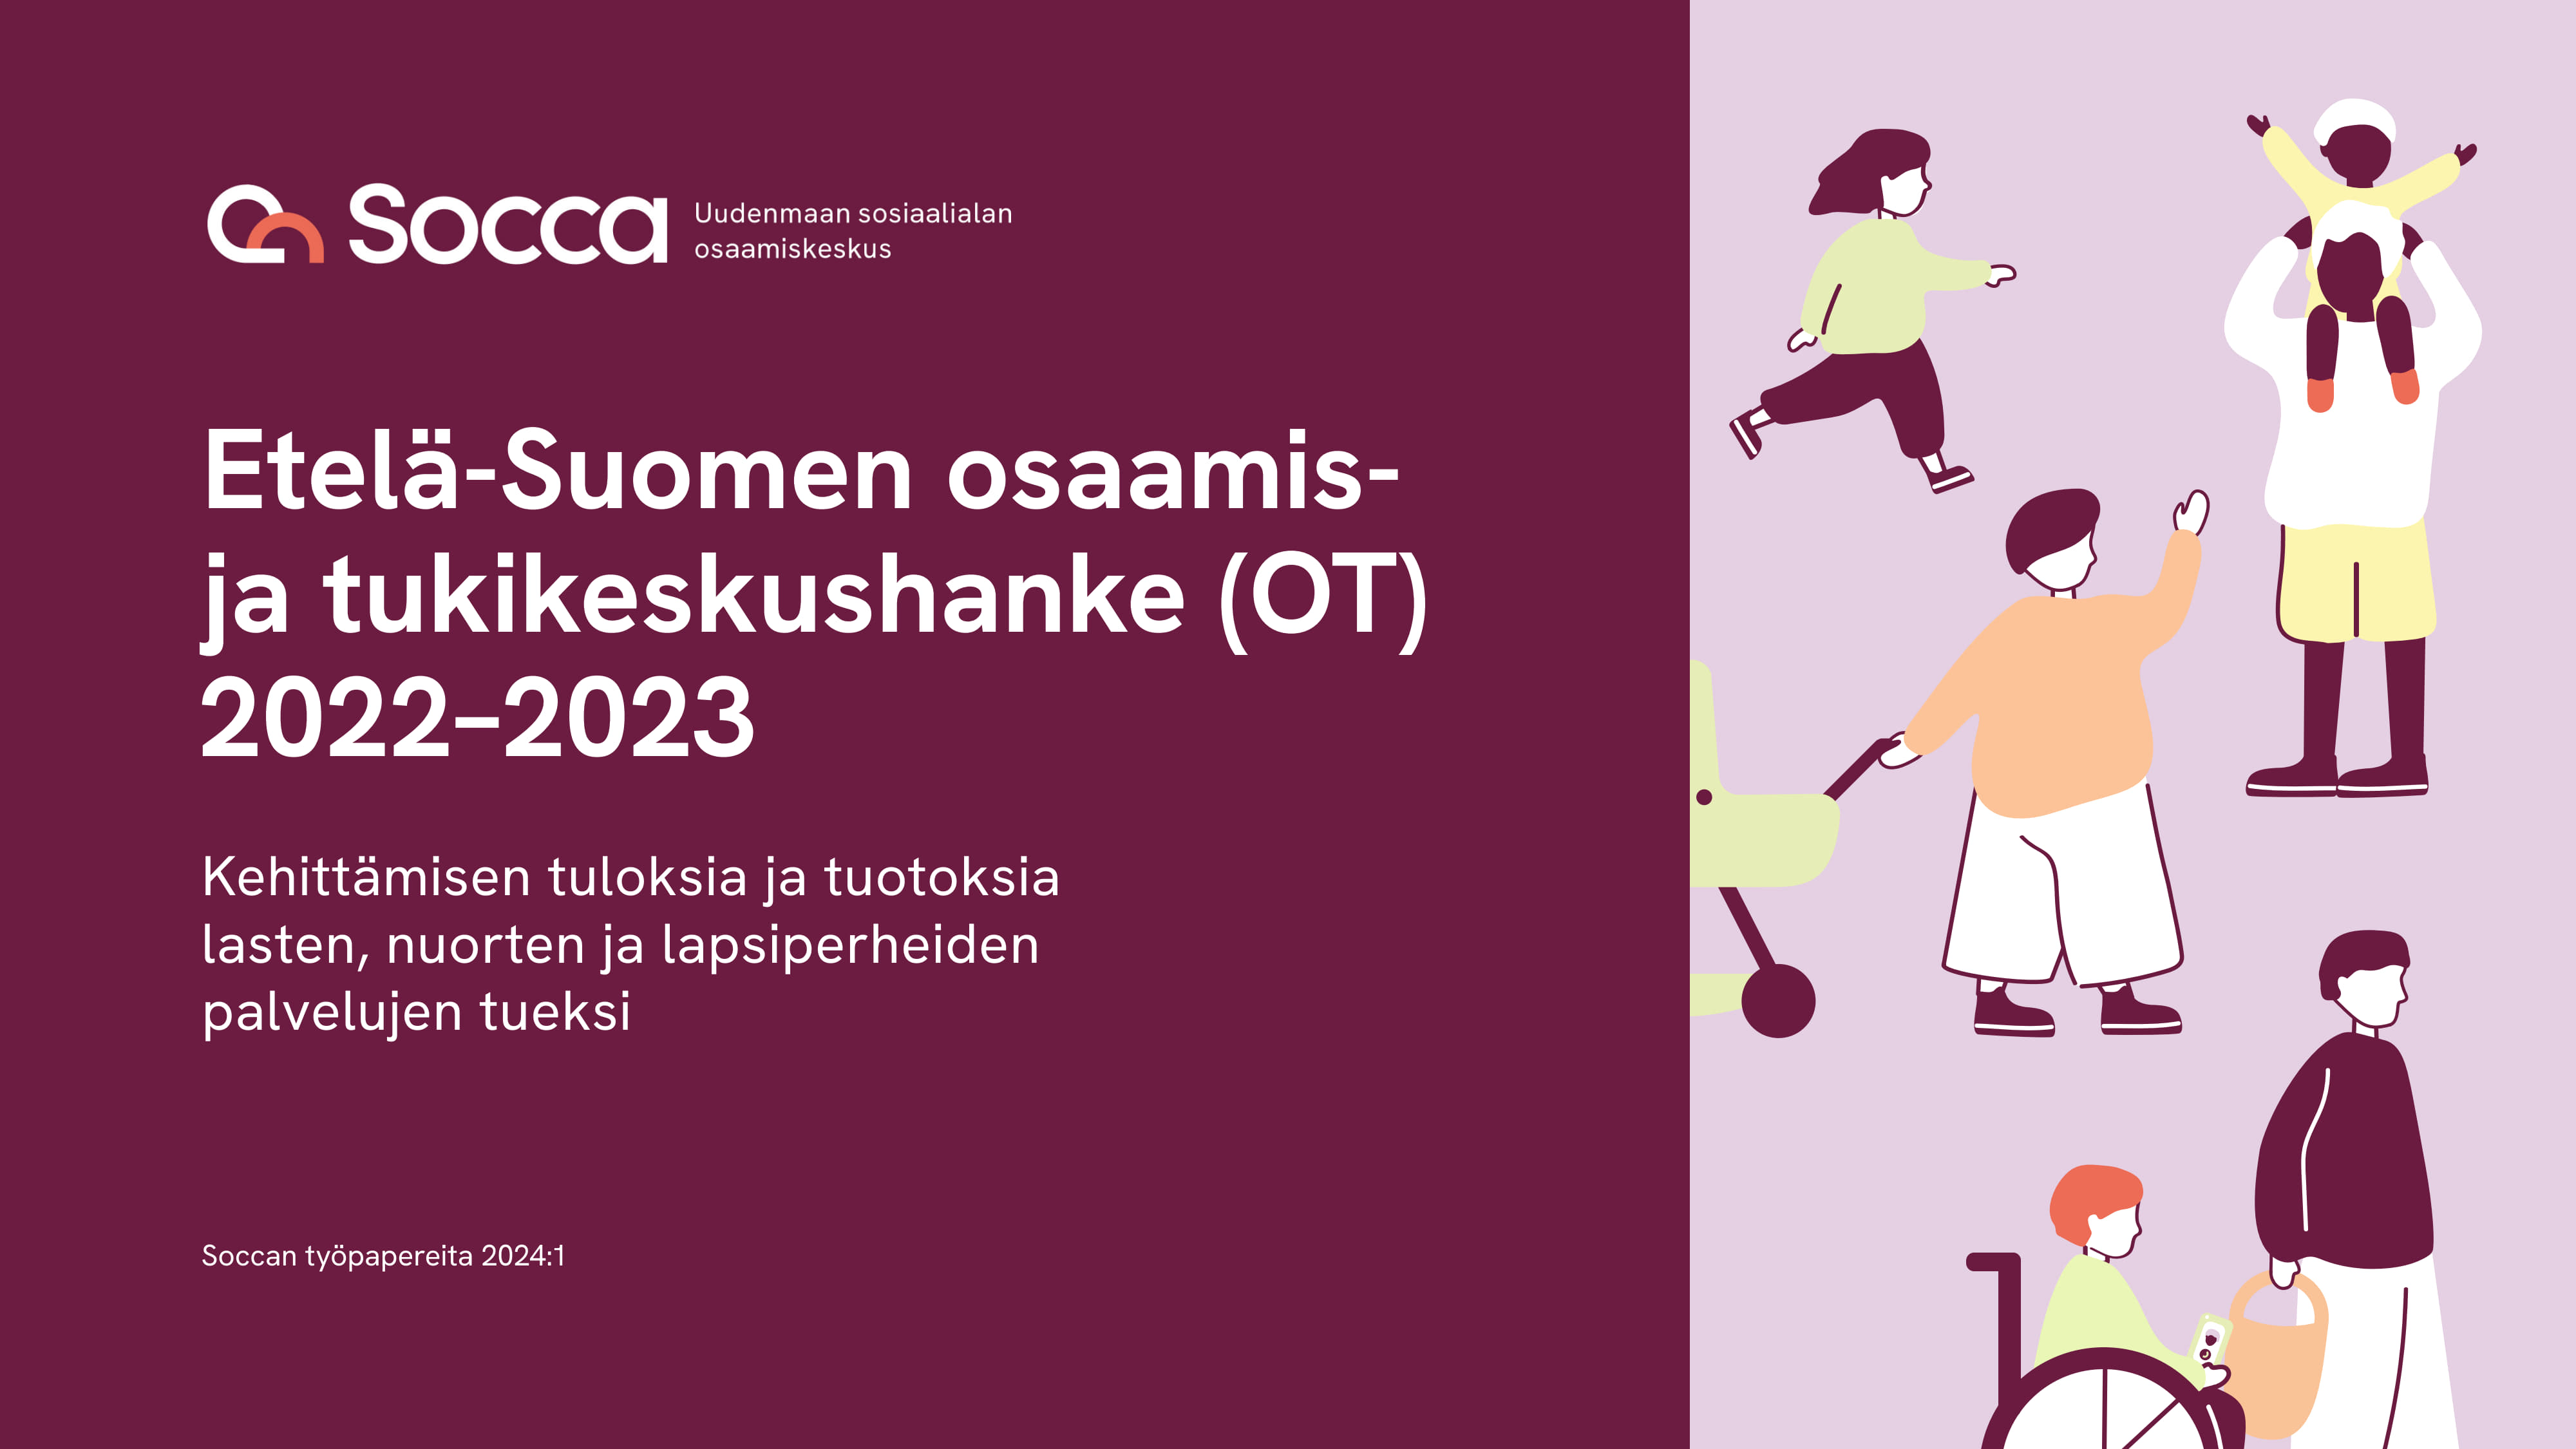 Etelä-Suomen OT-keskushanke 2022-2023 raportti.